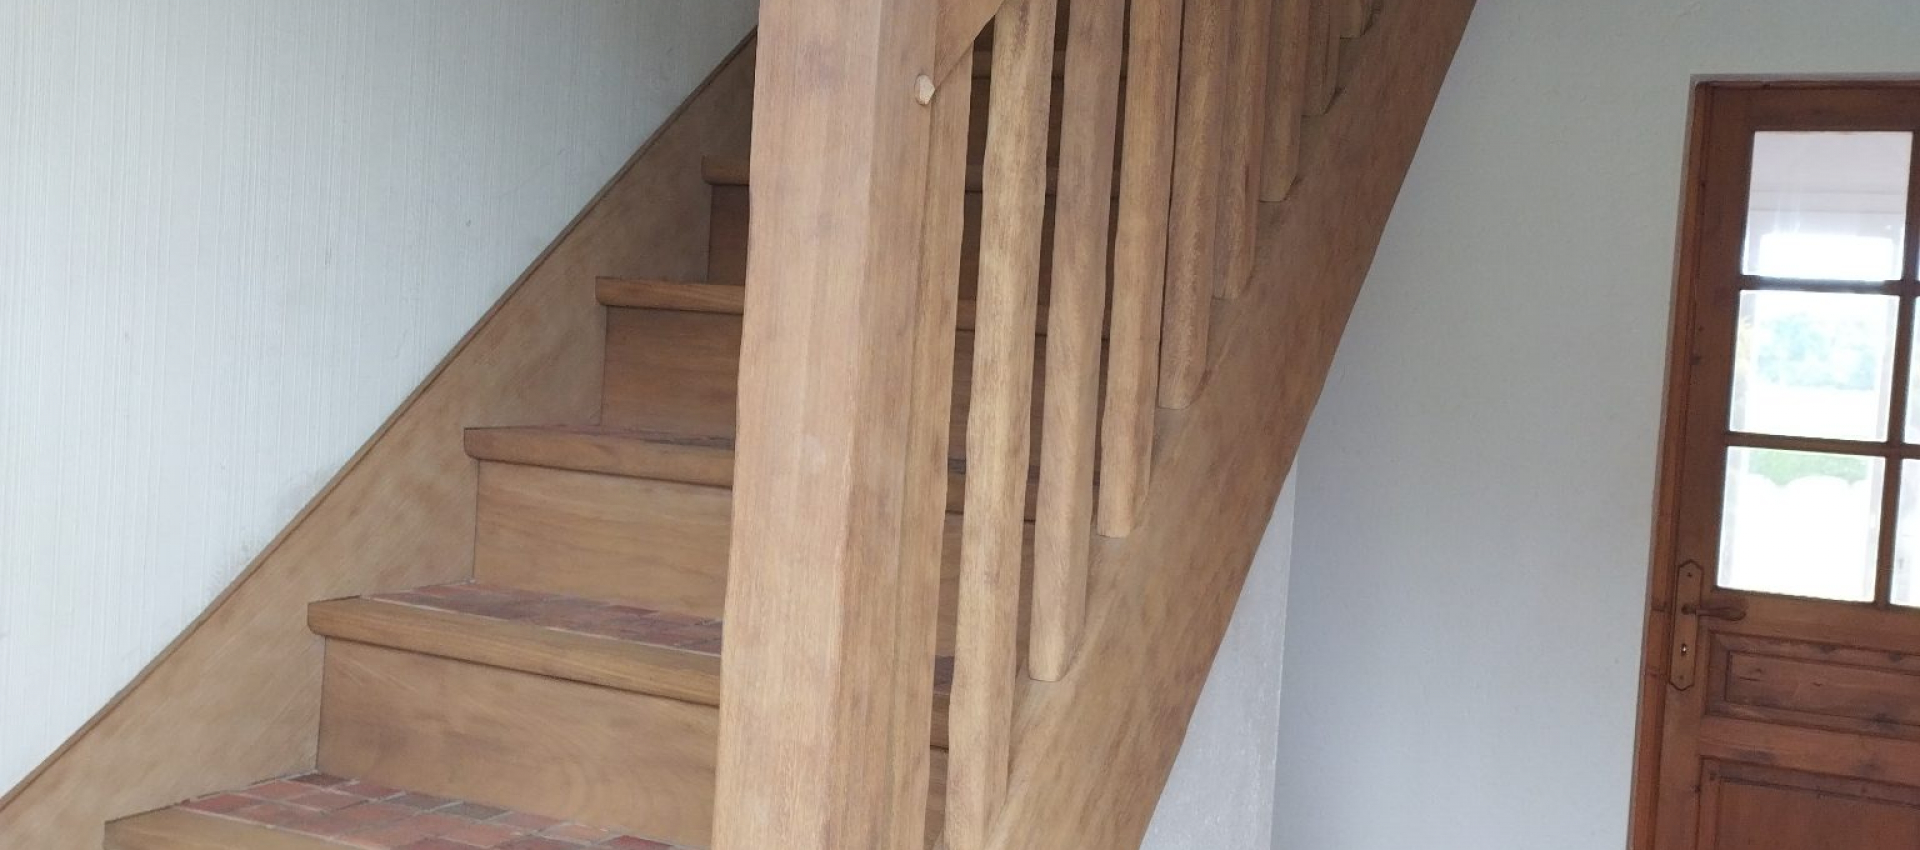 Aérogommage du bessin : escalier en rénovation